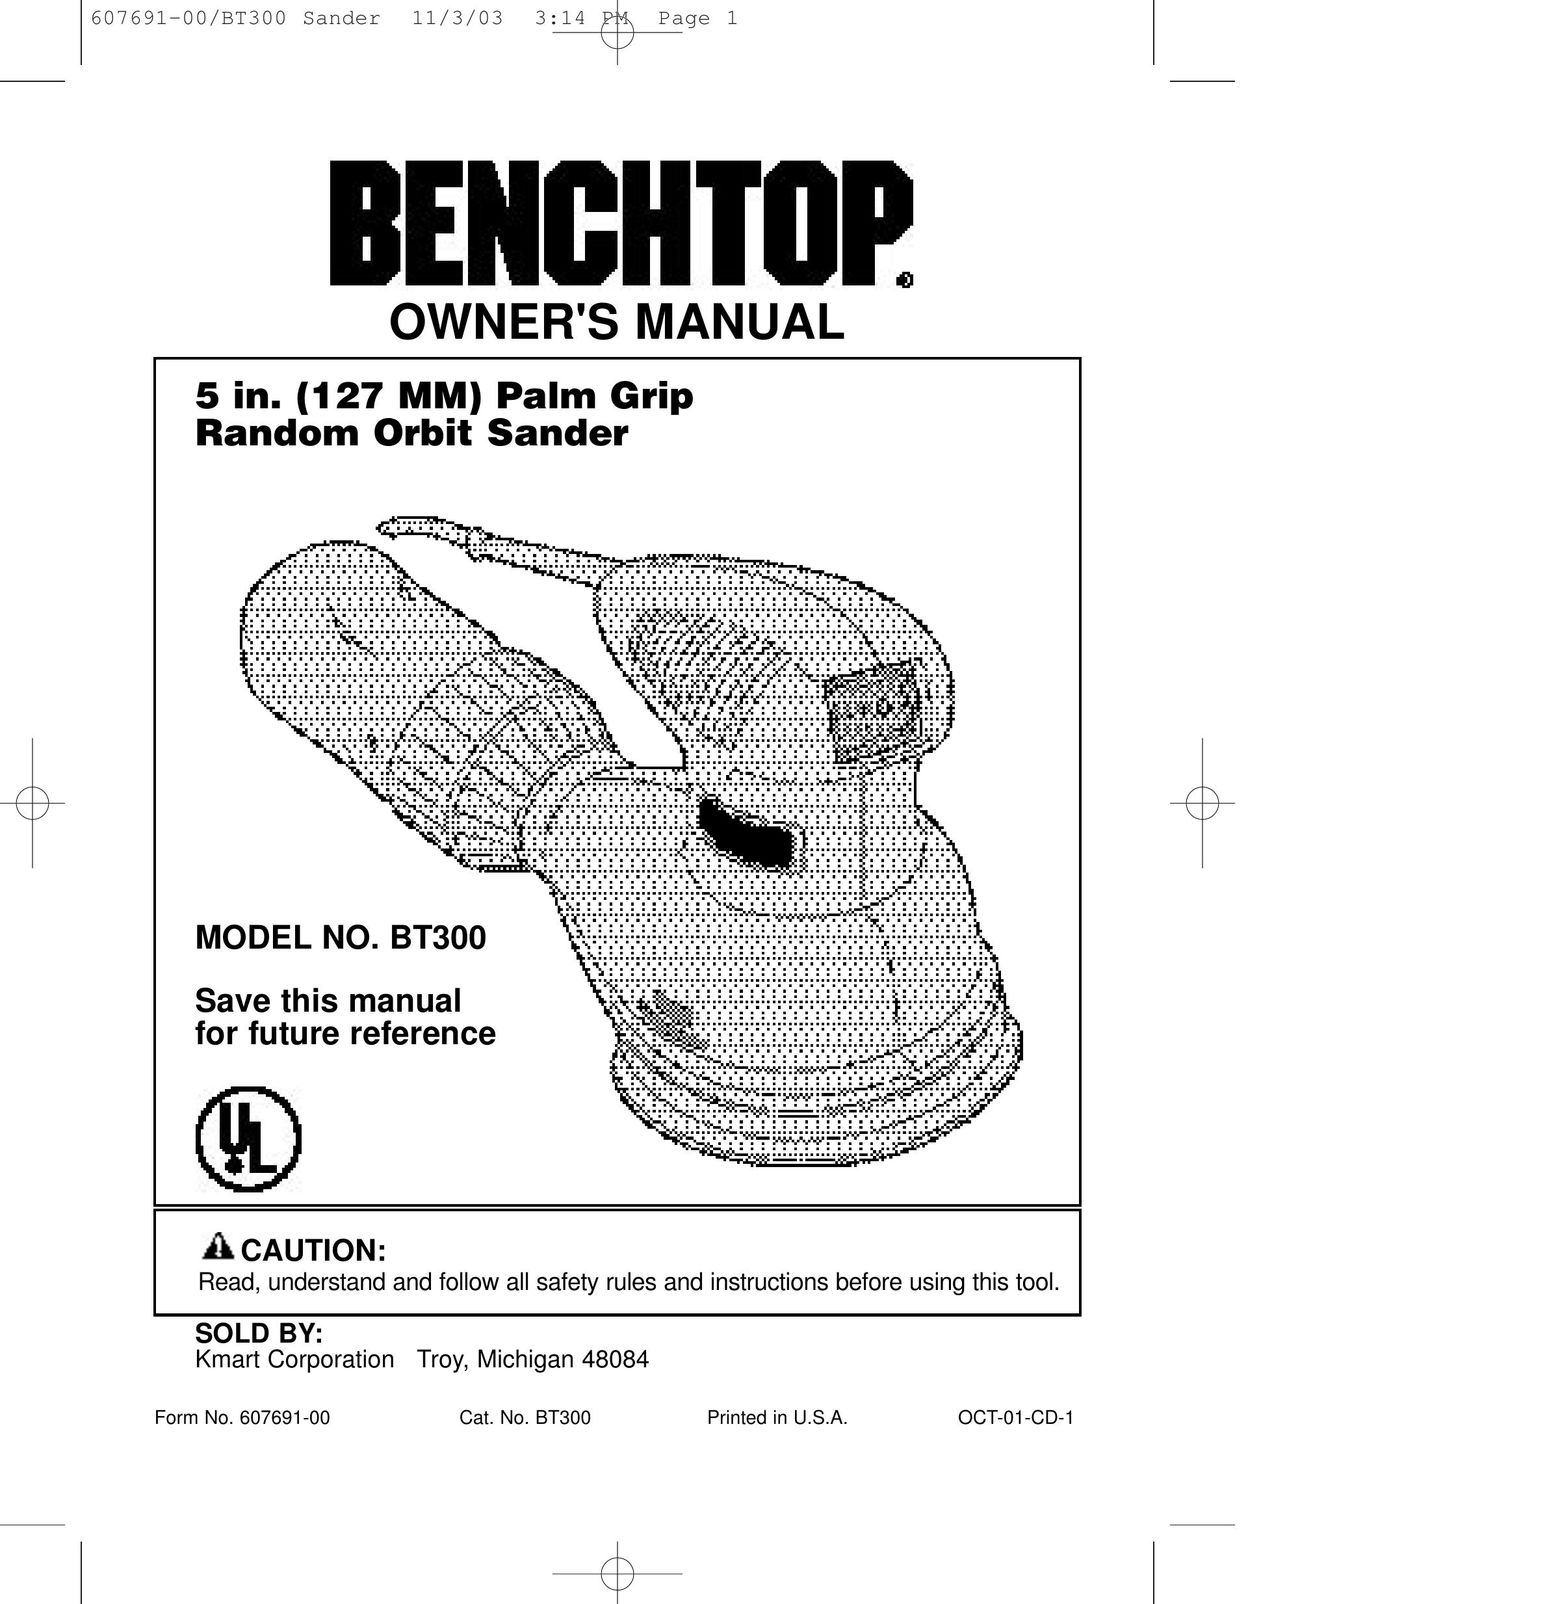 Black & Decker 607691-00 Sander User Manual